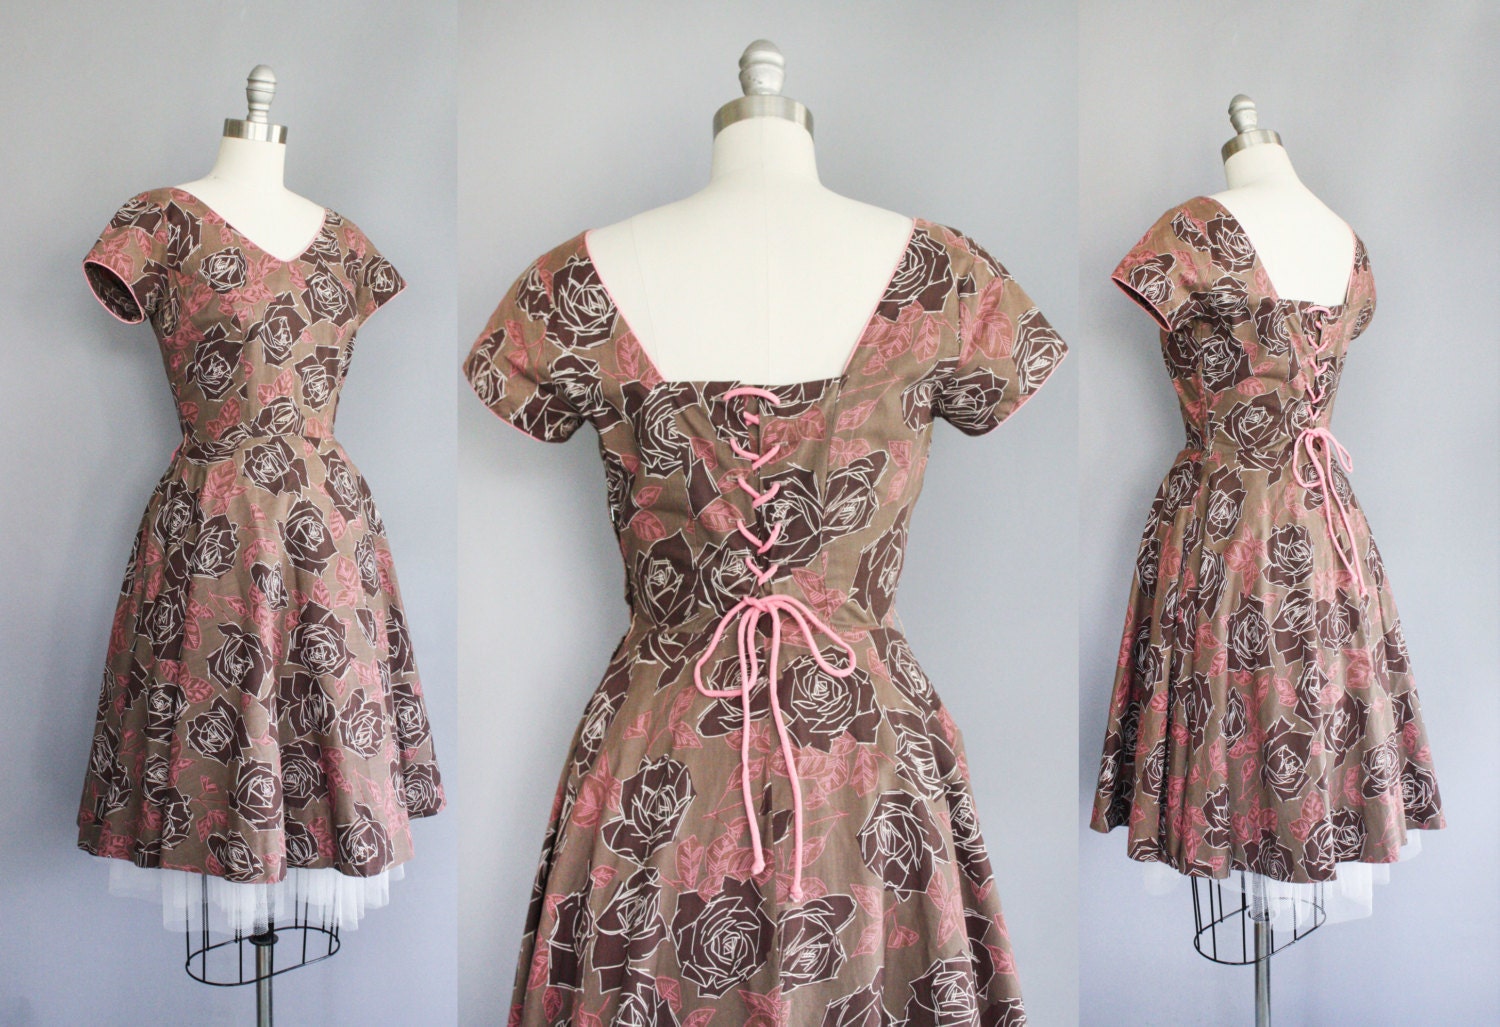 40s vintage rose print dress // corset cinching back // size XS - S - AnatomyVintage